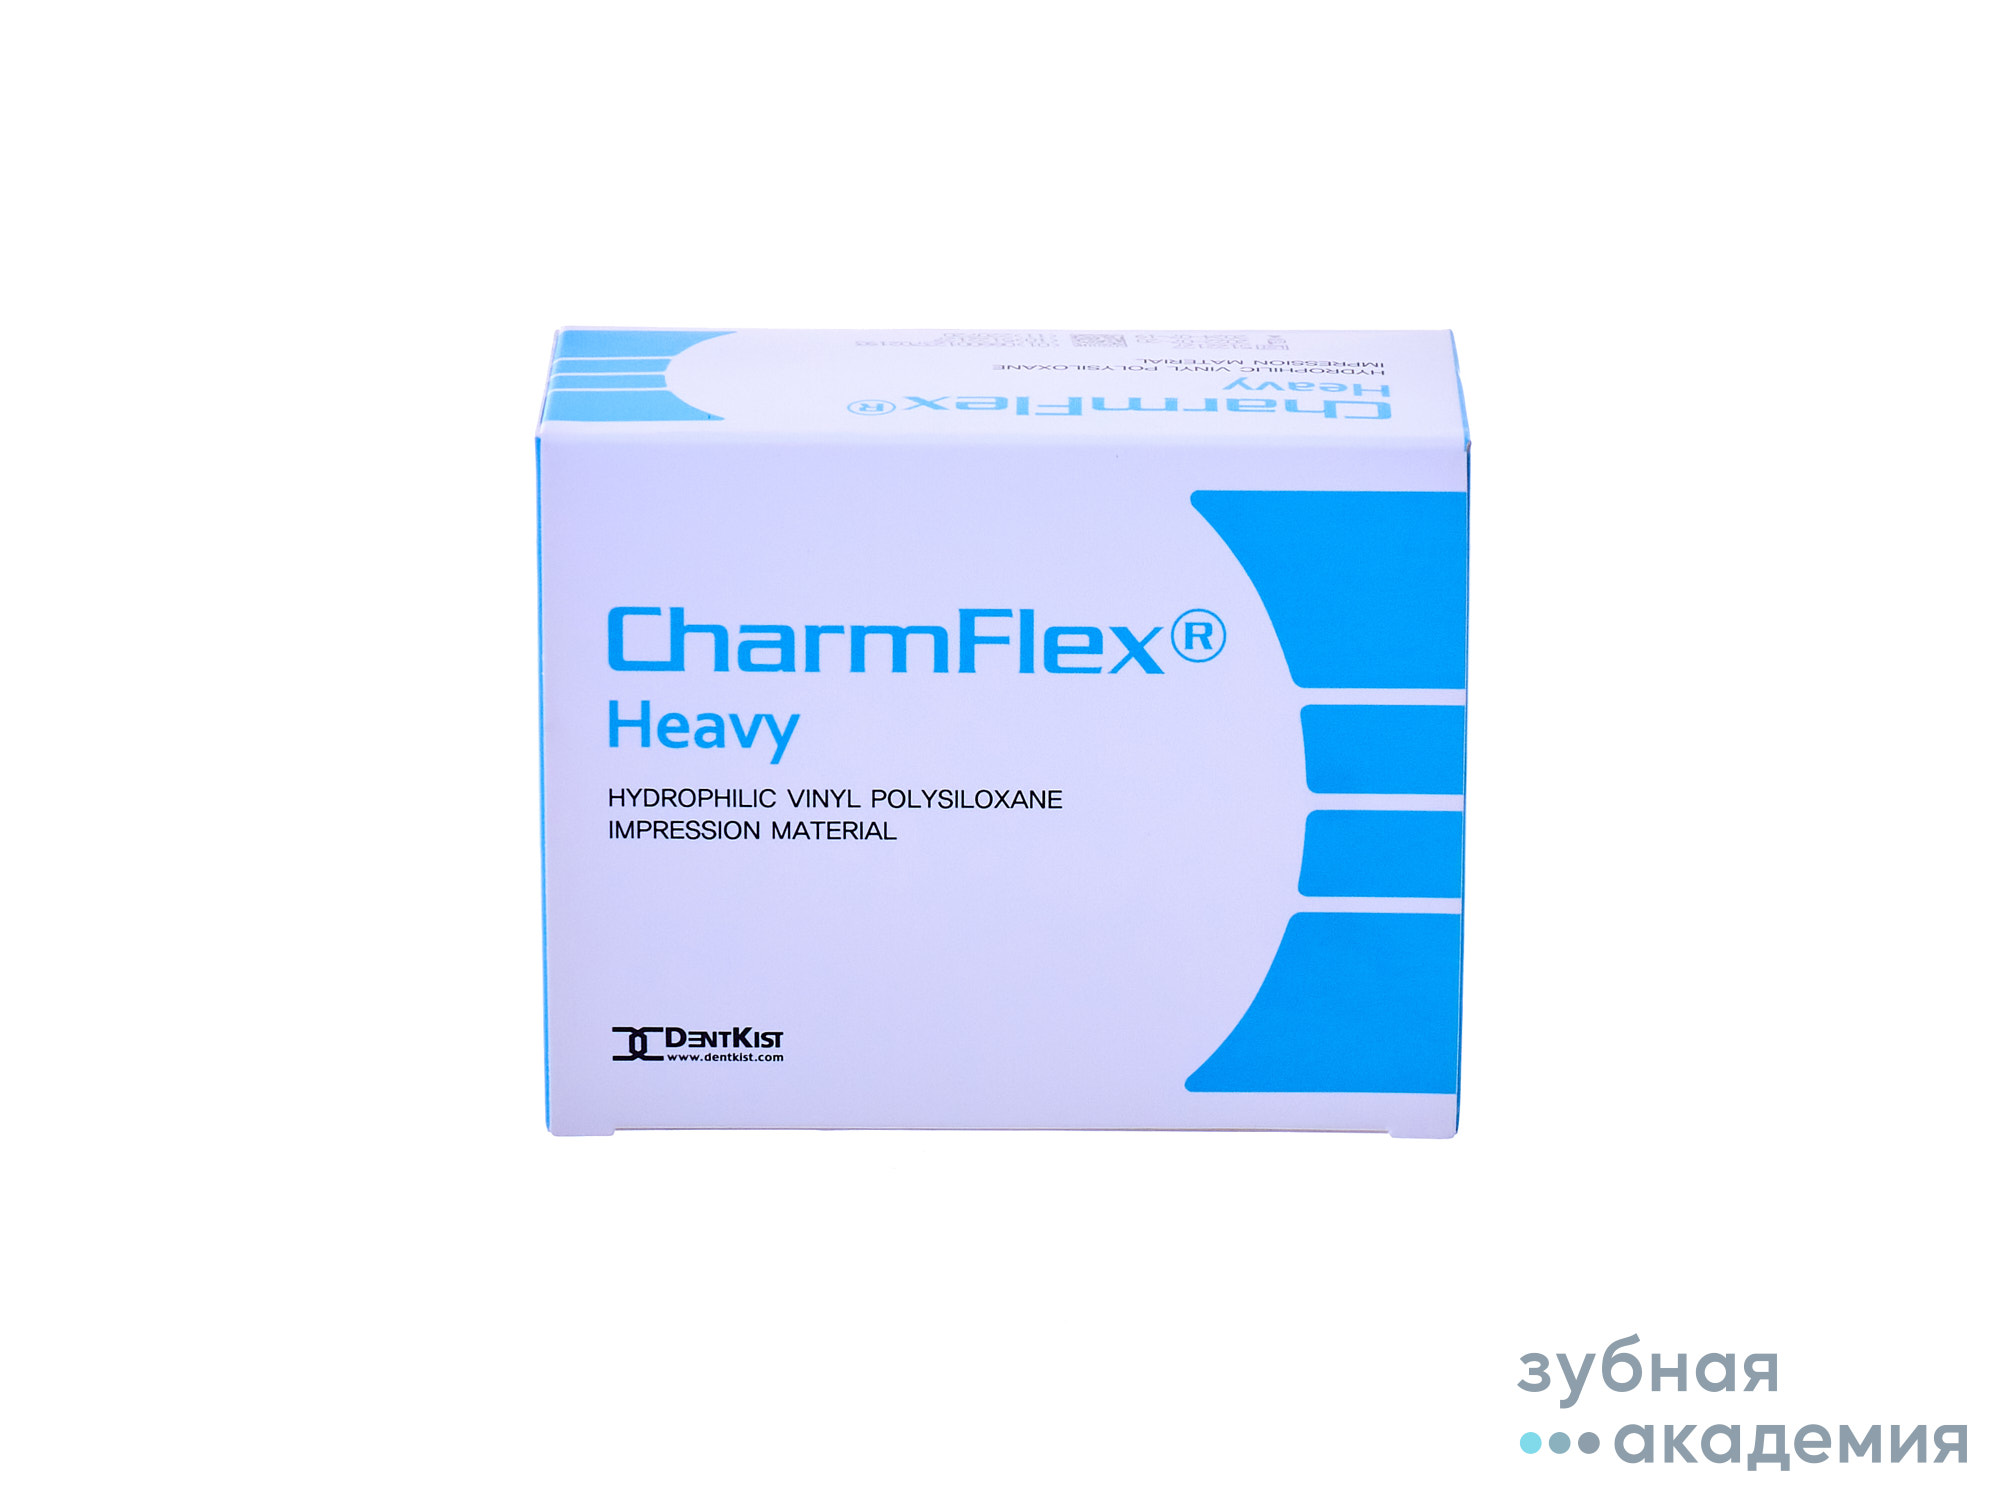 CharmFlex Heavy/ЧамФлекс Хеви упаковка 2 картр+6 након*50 мл/DentKist, Корея.